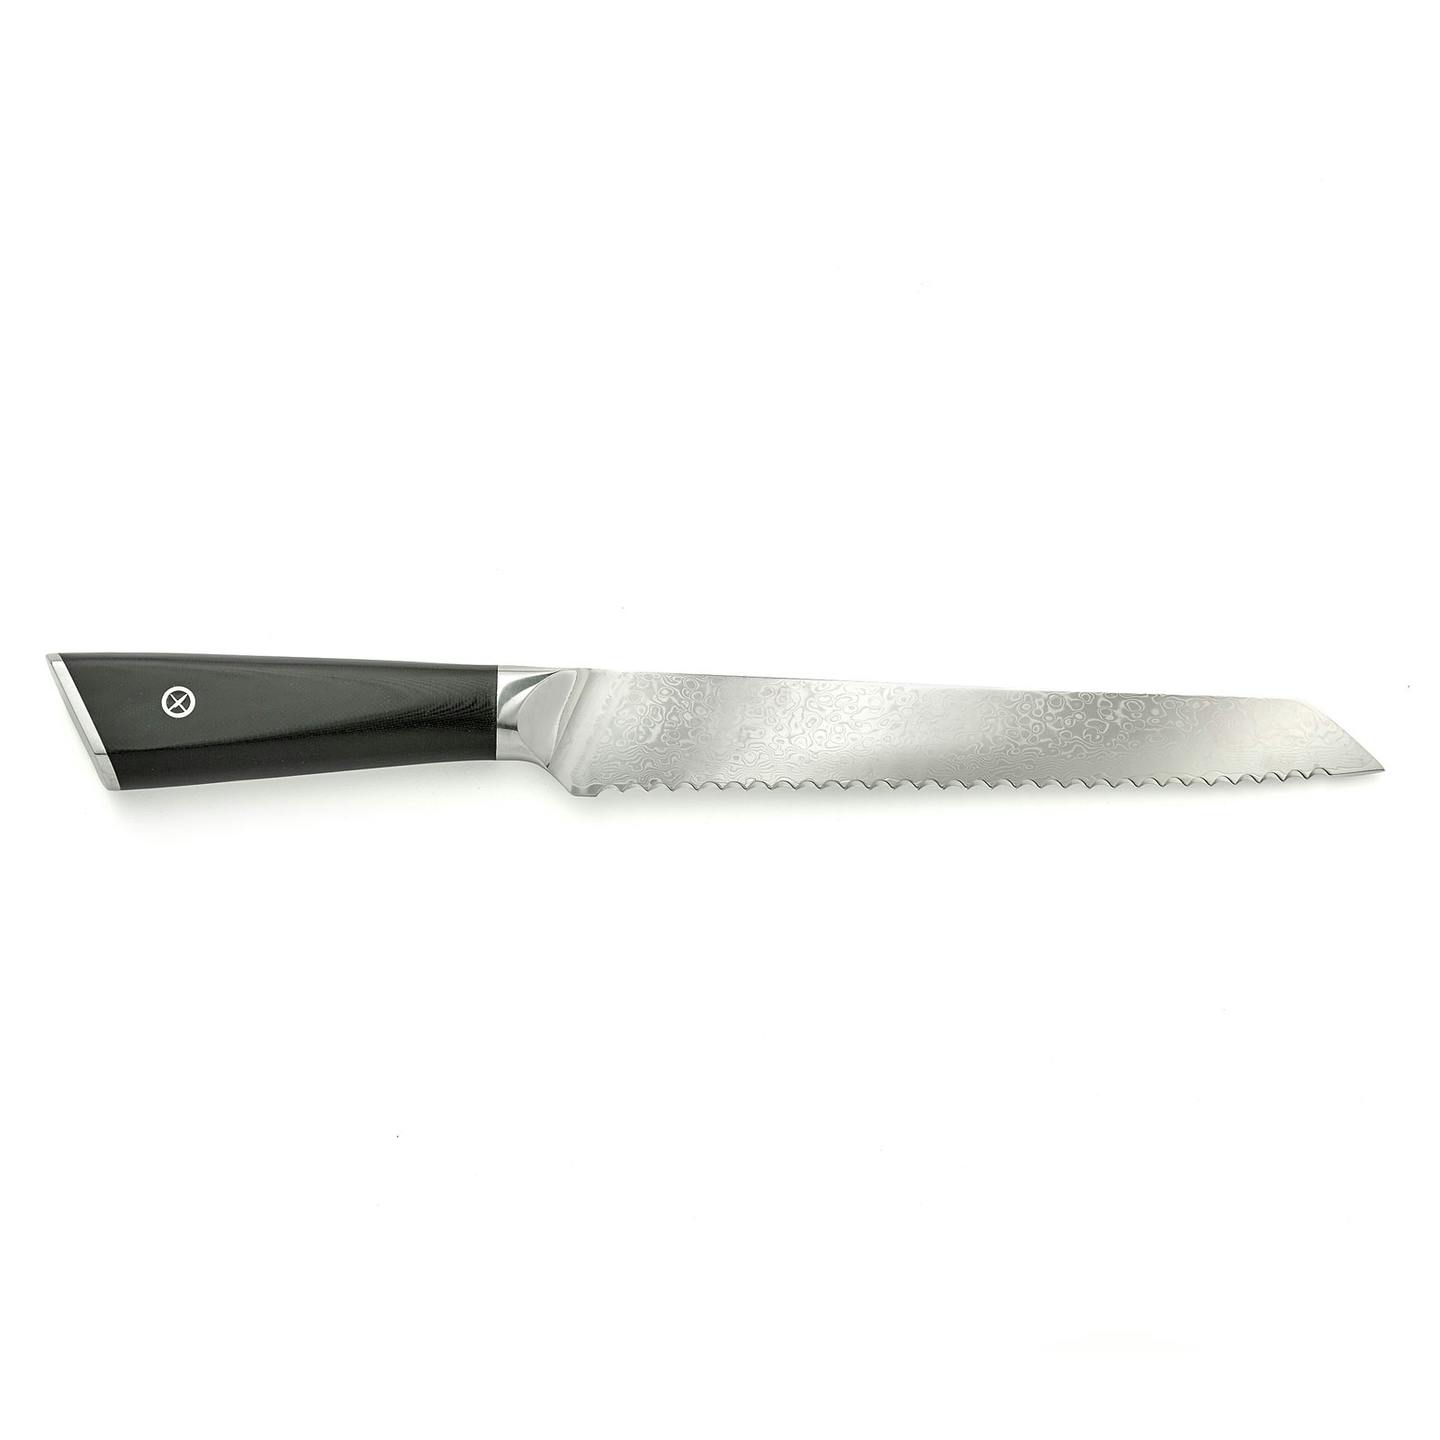 Mercer Culinary M13789 Premium Grade Super Steel, 8" Serrated Bread Knife, G10 Handle